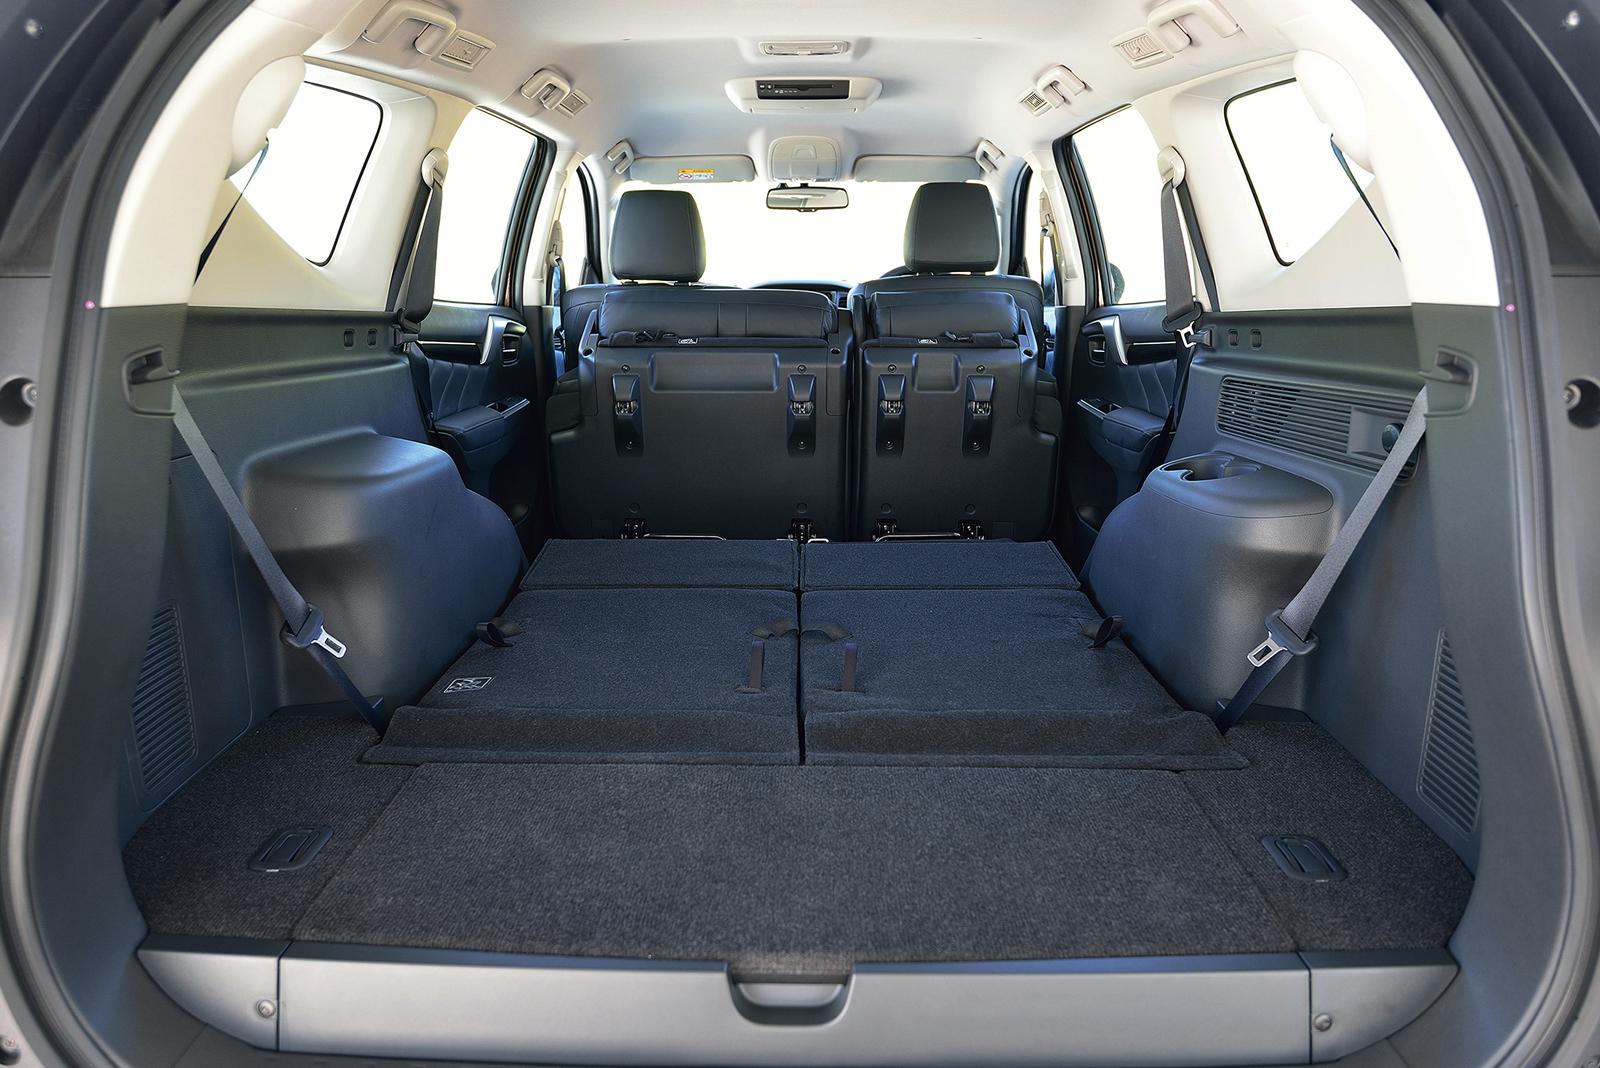 2016 Mitsubishi Pajero Sport boot space with seats folded 